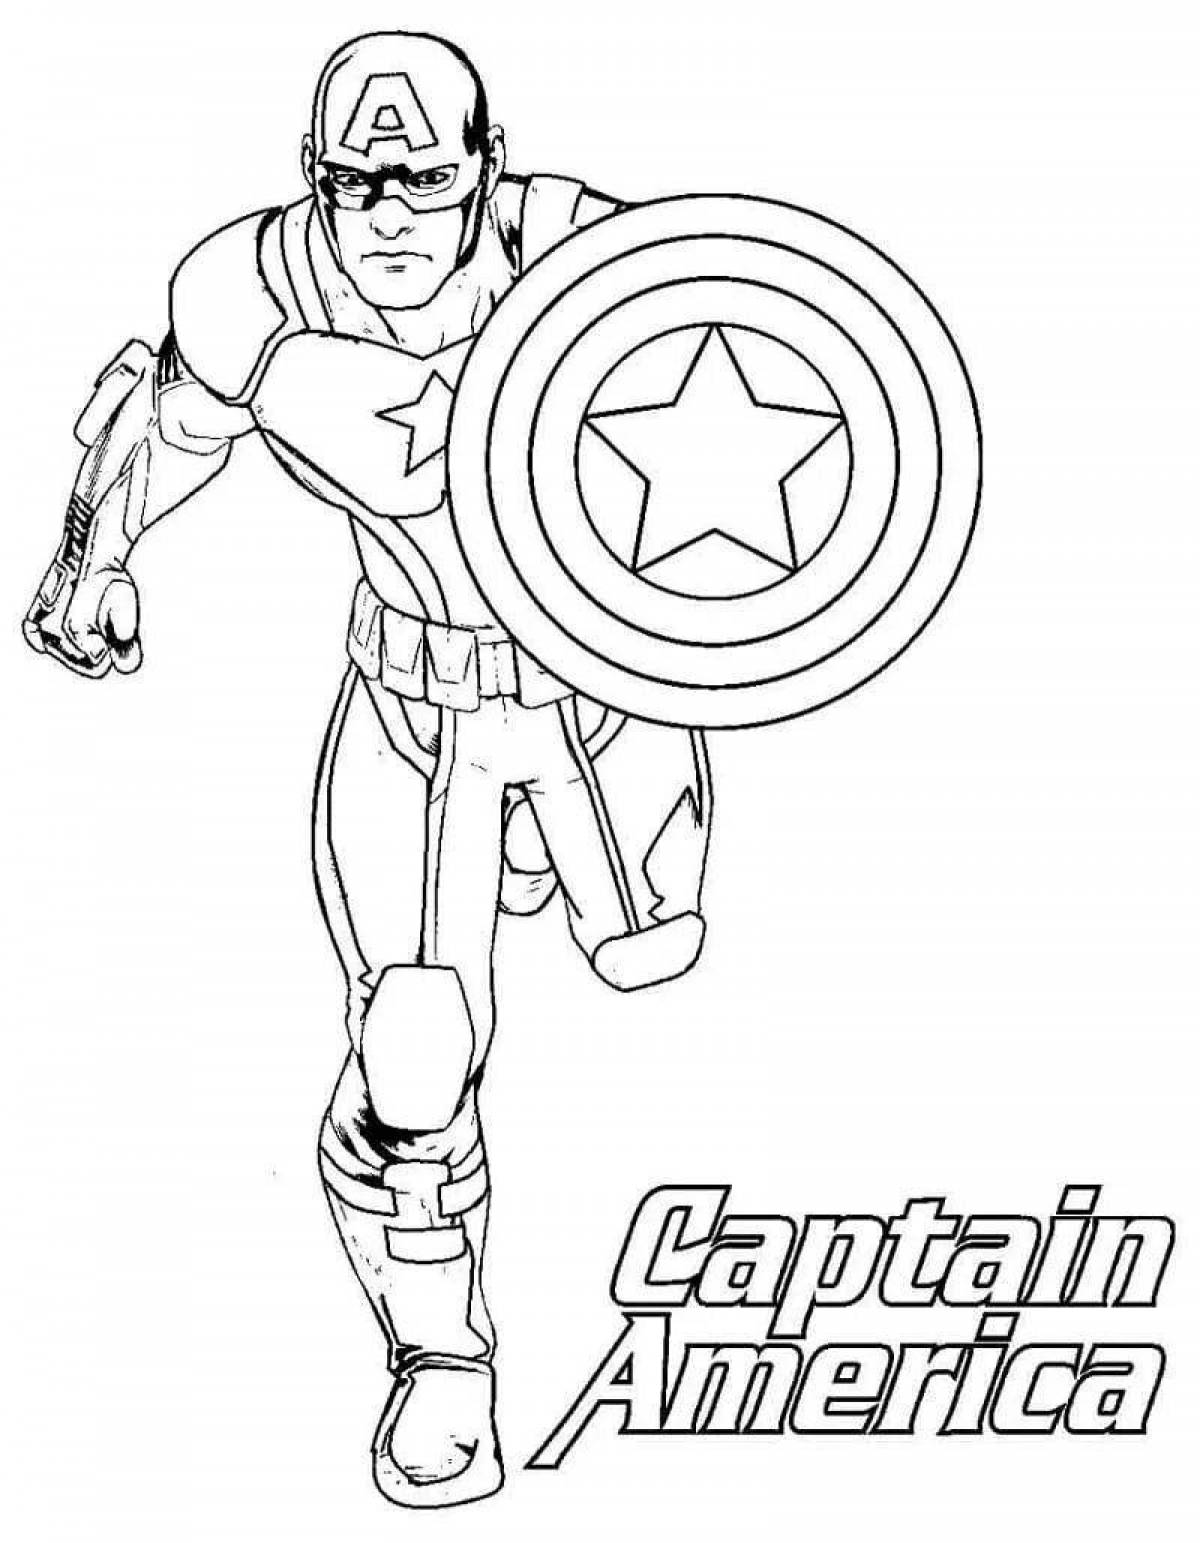 Captain America excellent coloring book